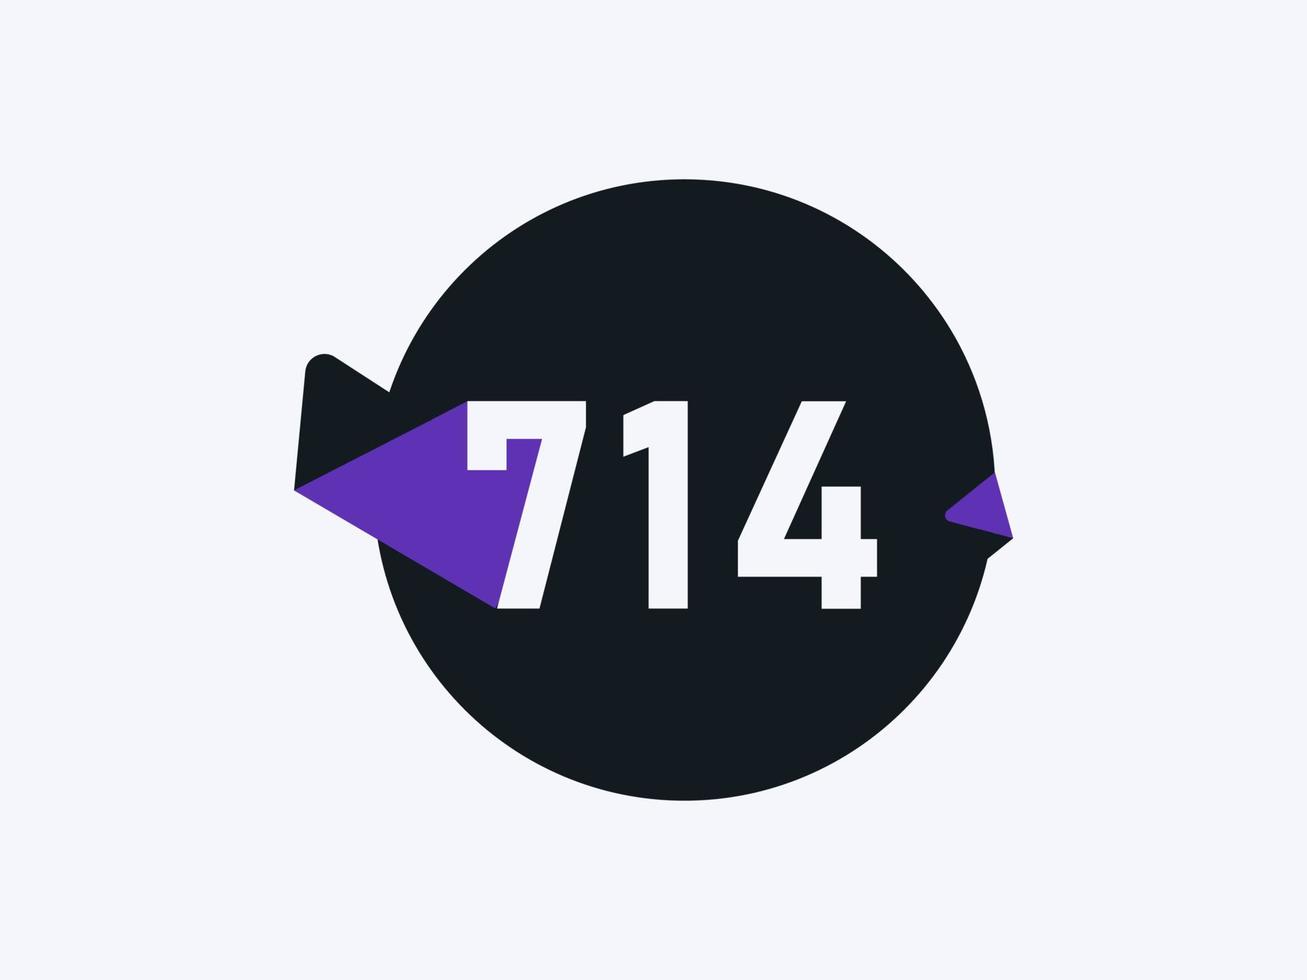 714 Number logo icon design vector image. Number logo icon design vector image